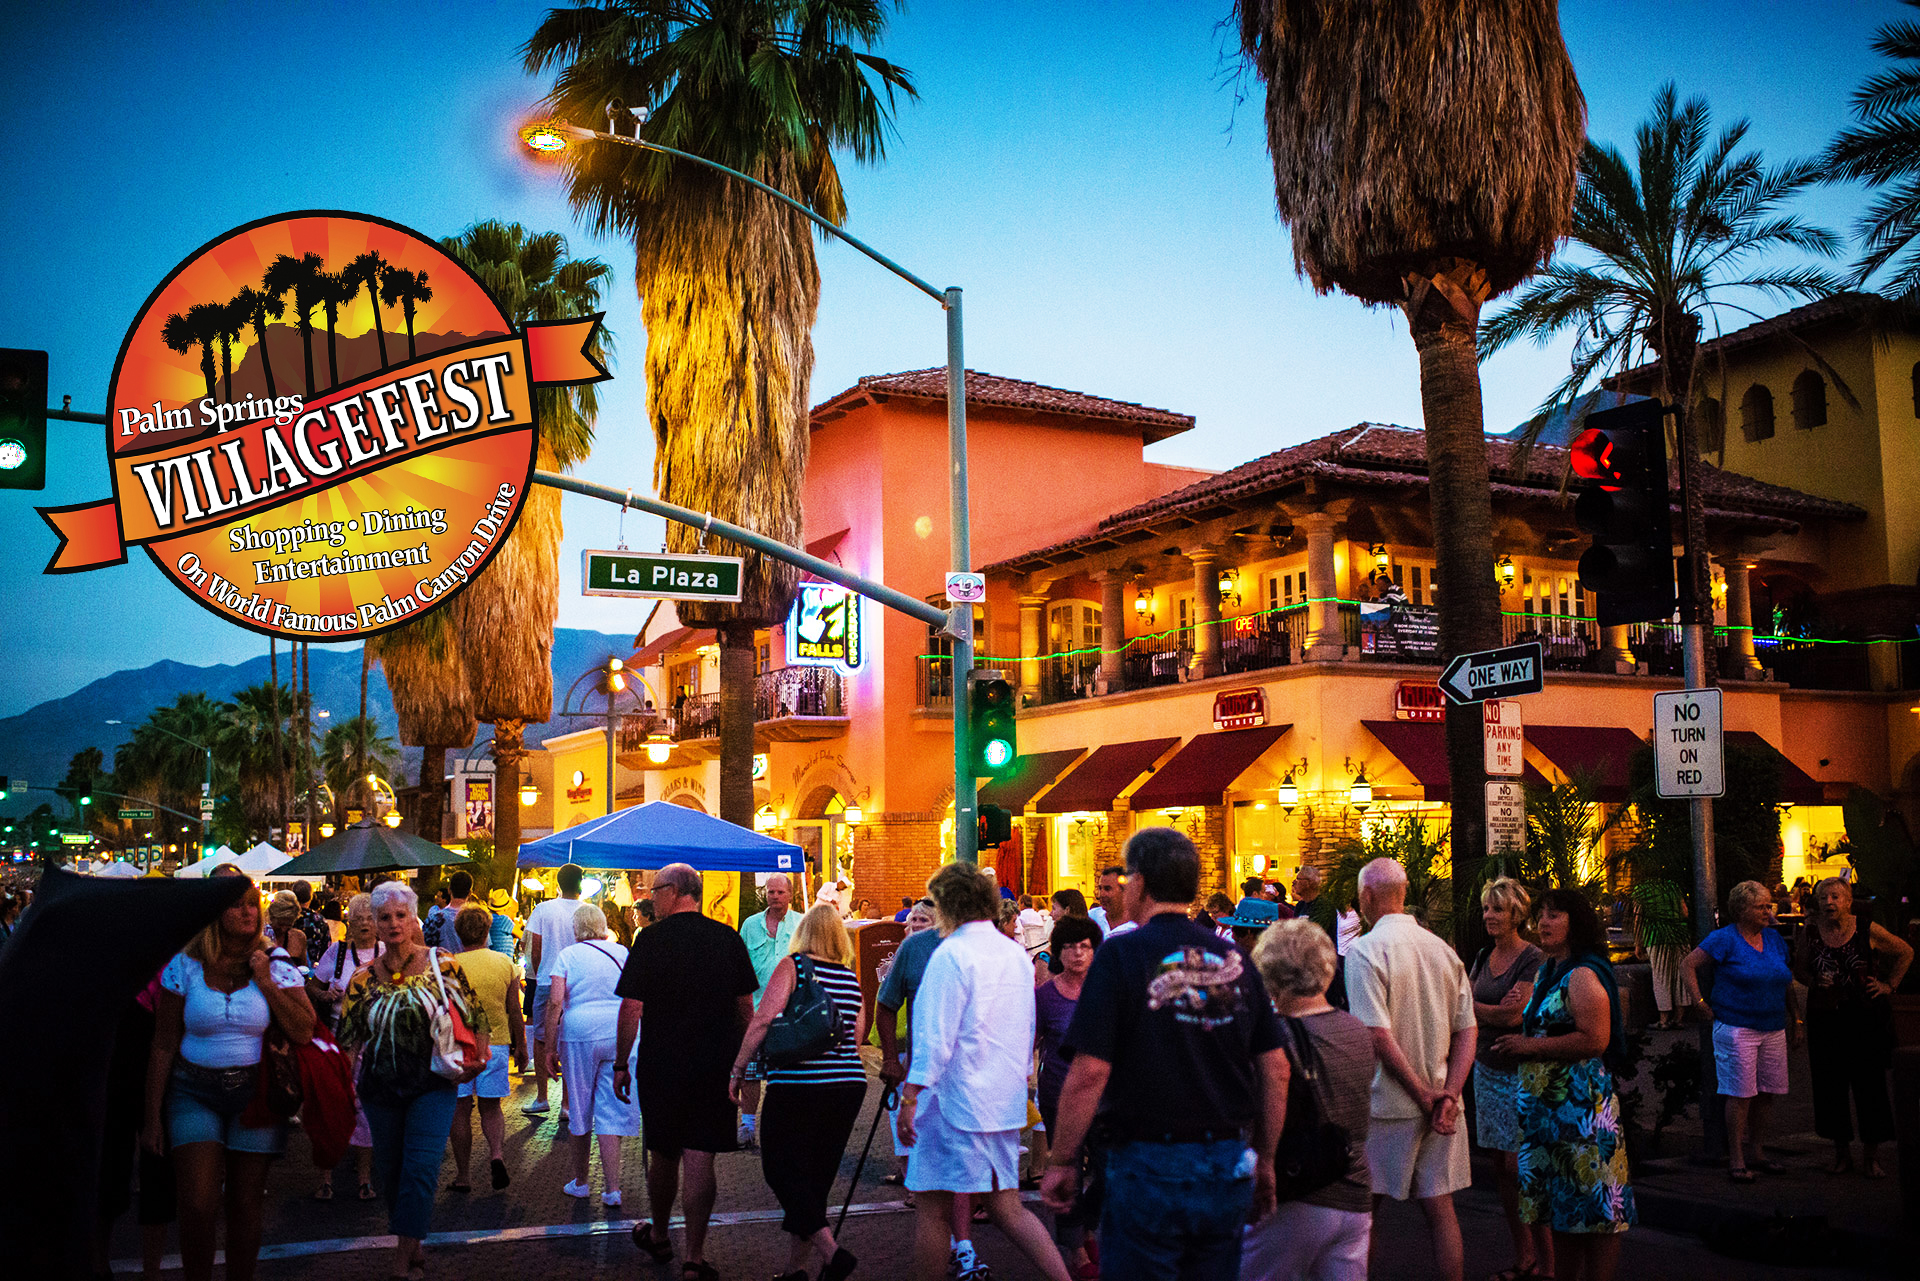 Villagefest Palm Springs, CA • Every Thursday Night